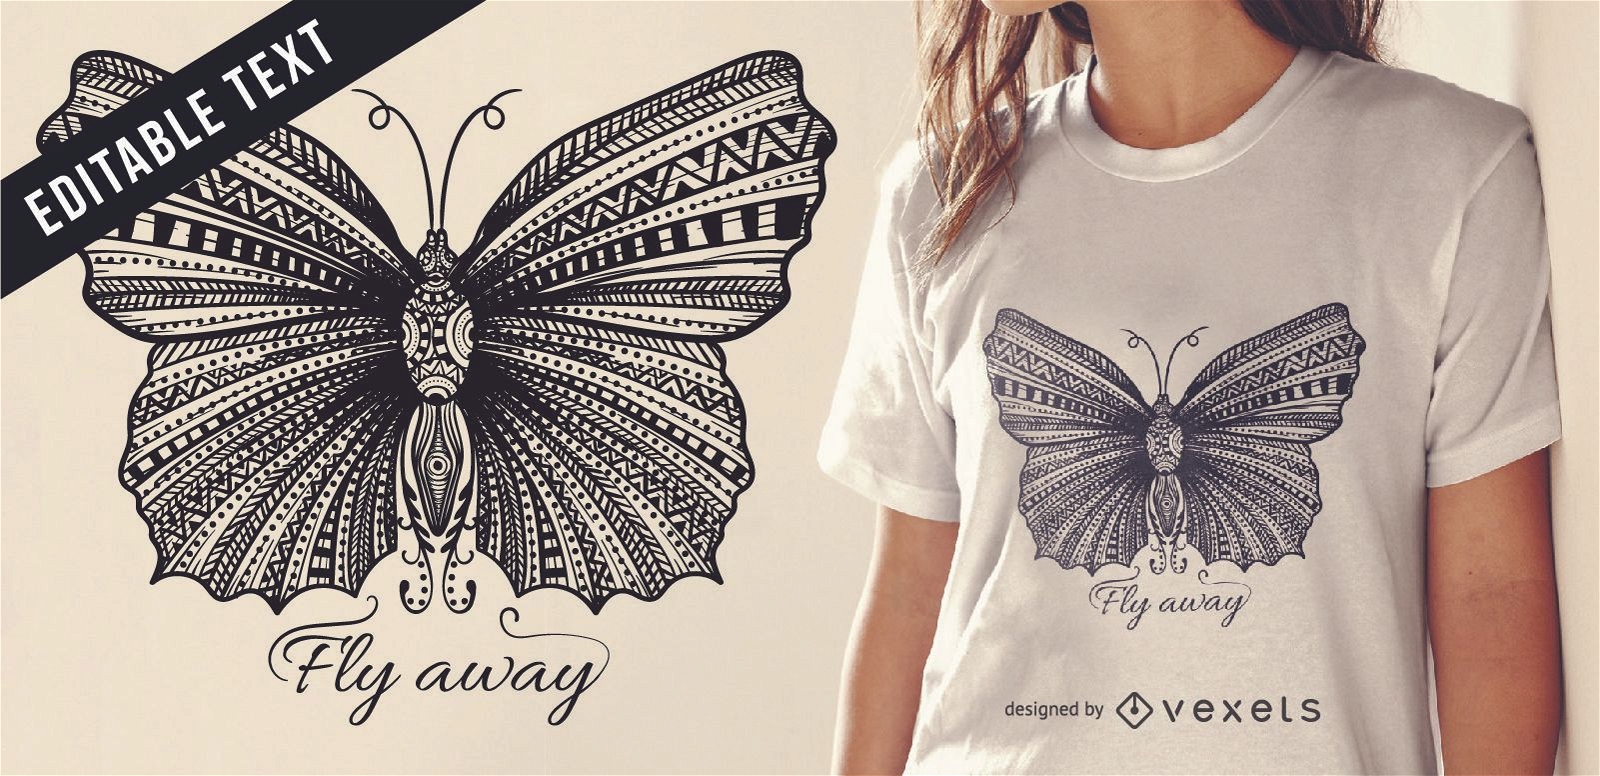 Butterfly illustration t-shirt design